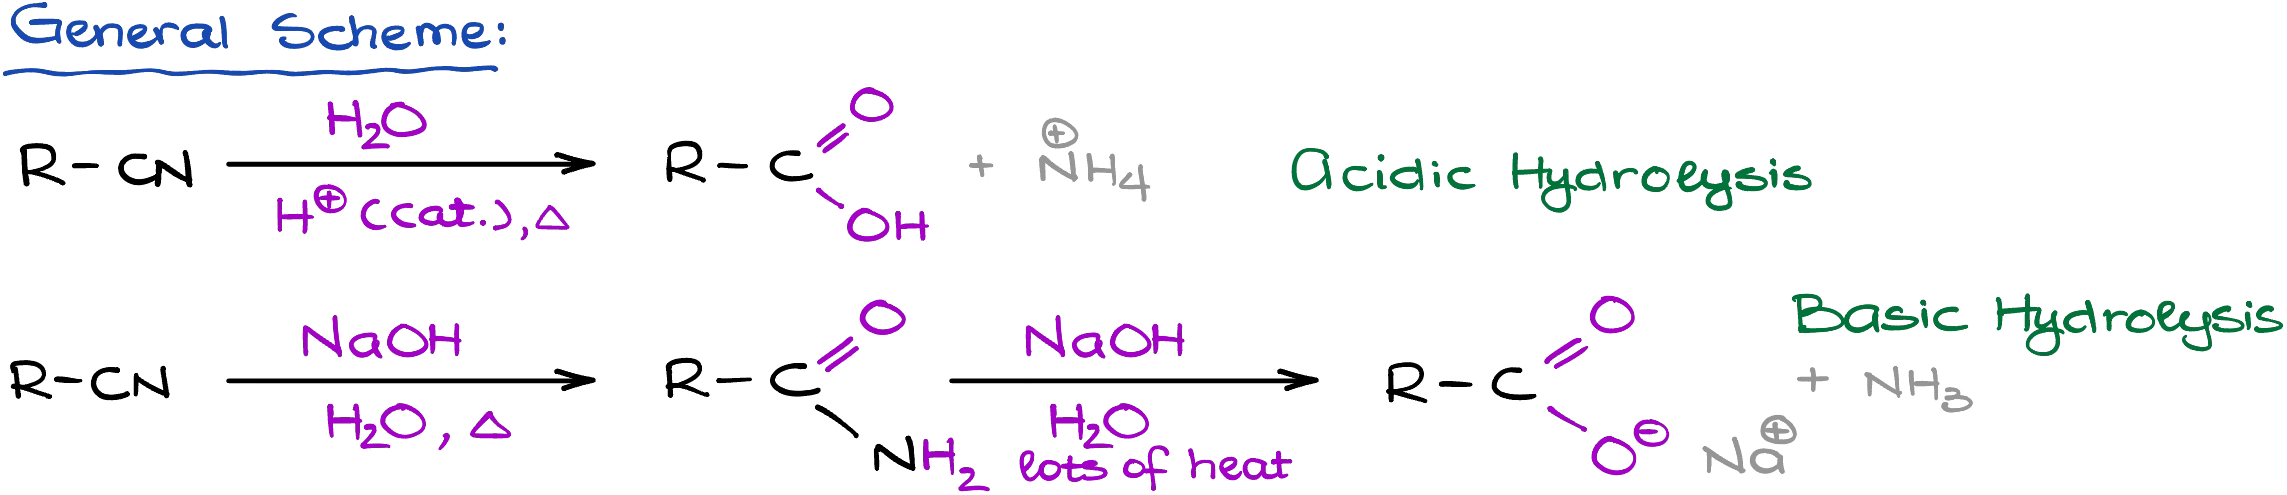 general scheme of the nitrile hydrolysis